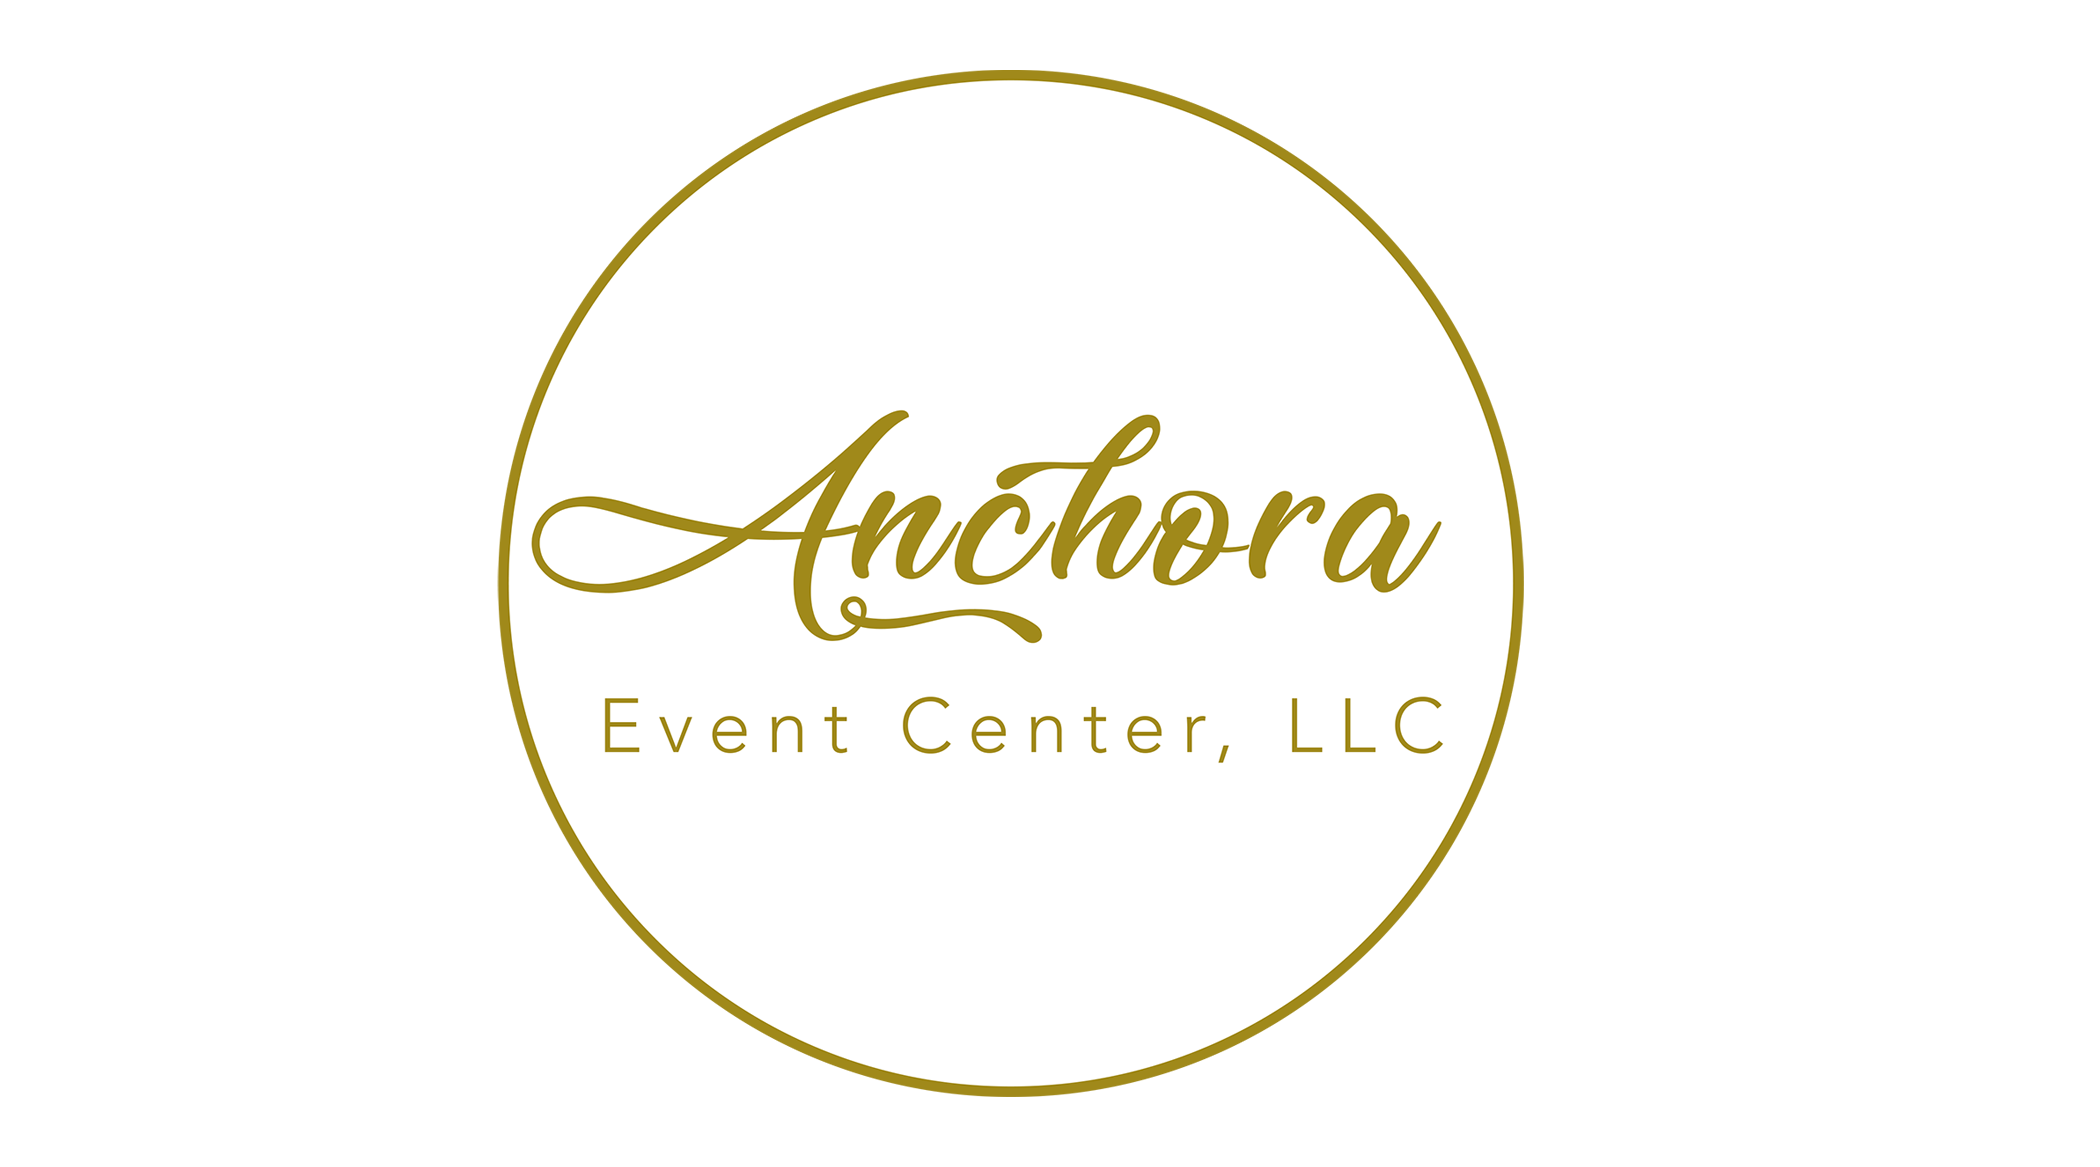 Home - Anchora Event Center, LLC